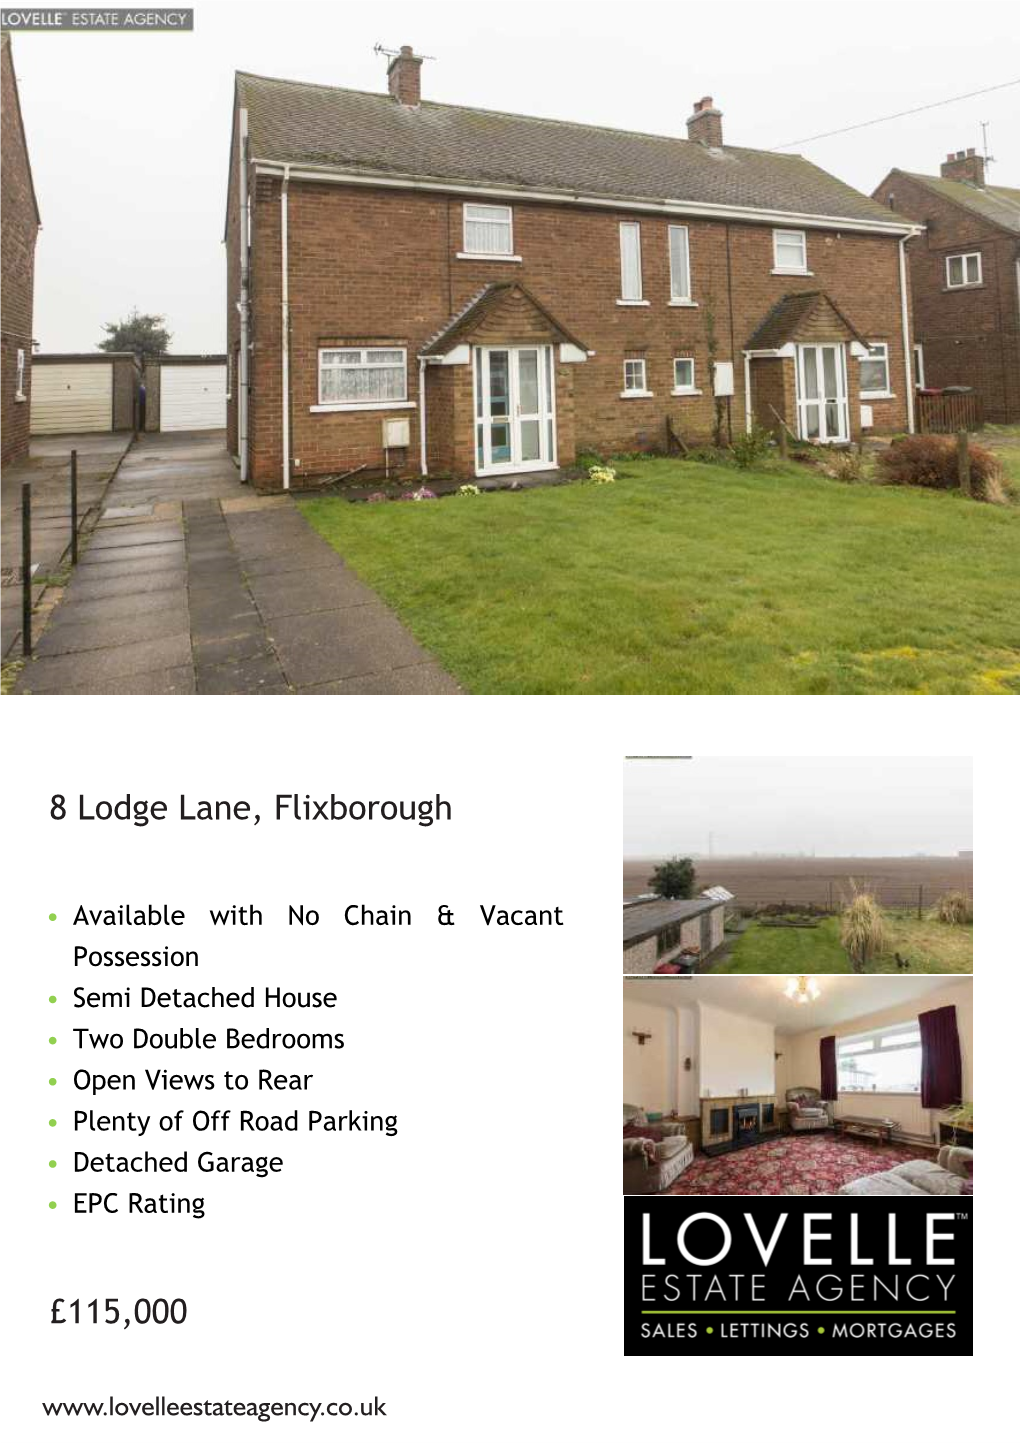 8 Lodge Lane, Flixborough £115,000